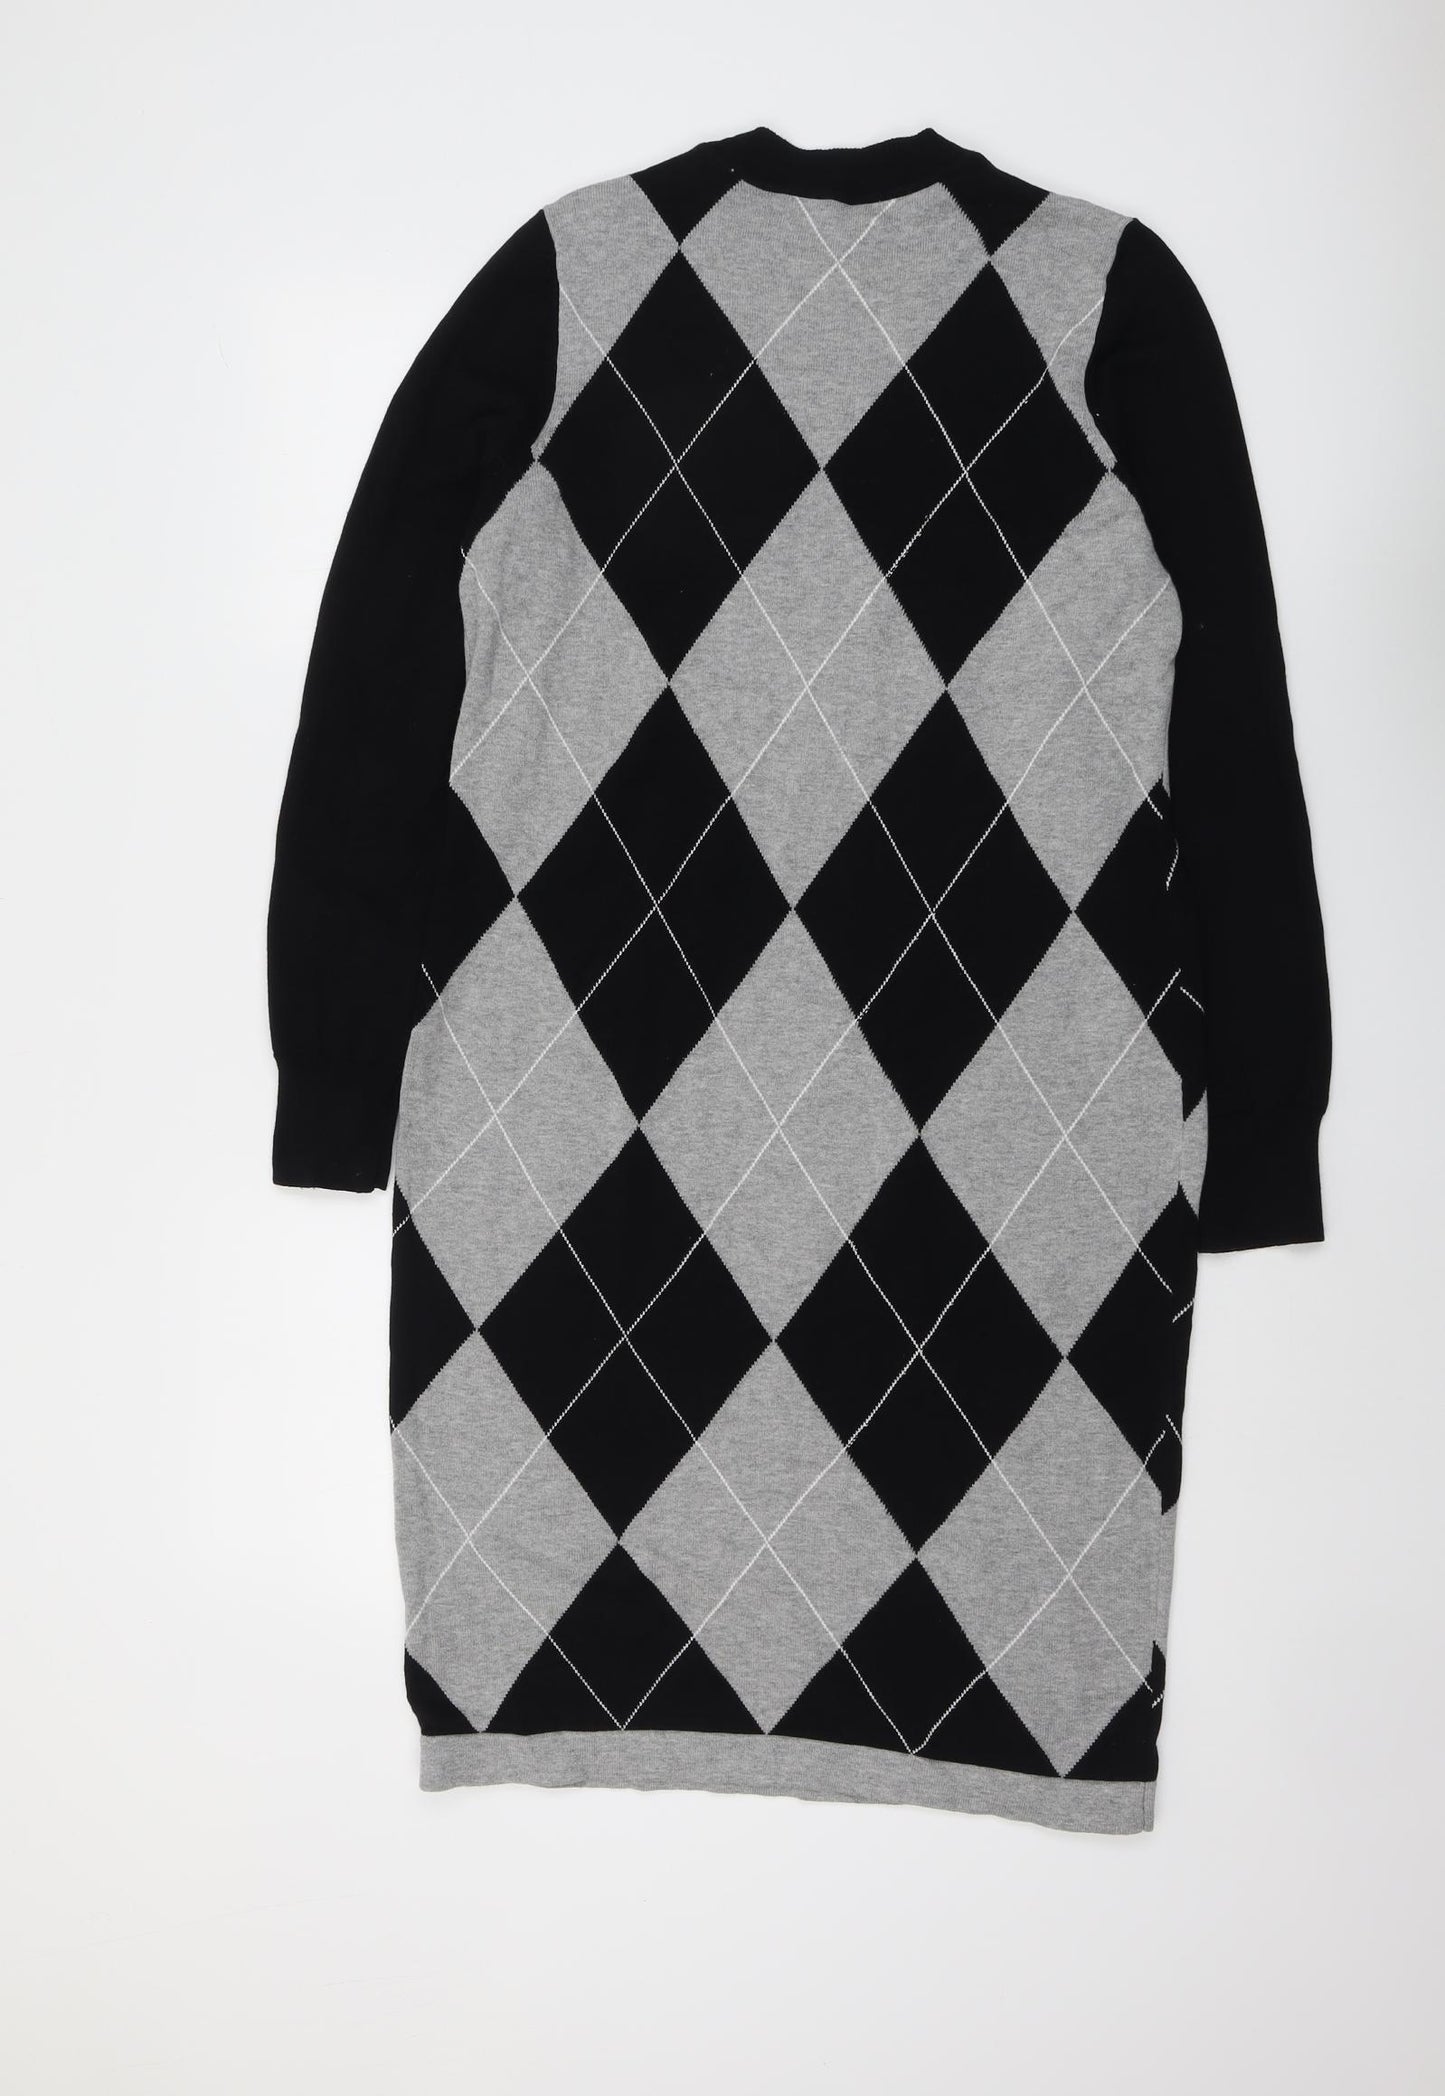 NEXT Womens Black Argyle/Diamond Cotton Jumper Dress Size 16 Round Neck Pullover